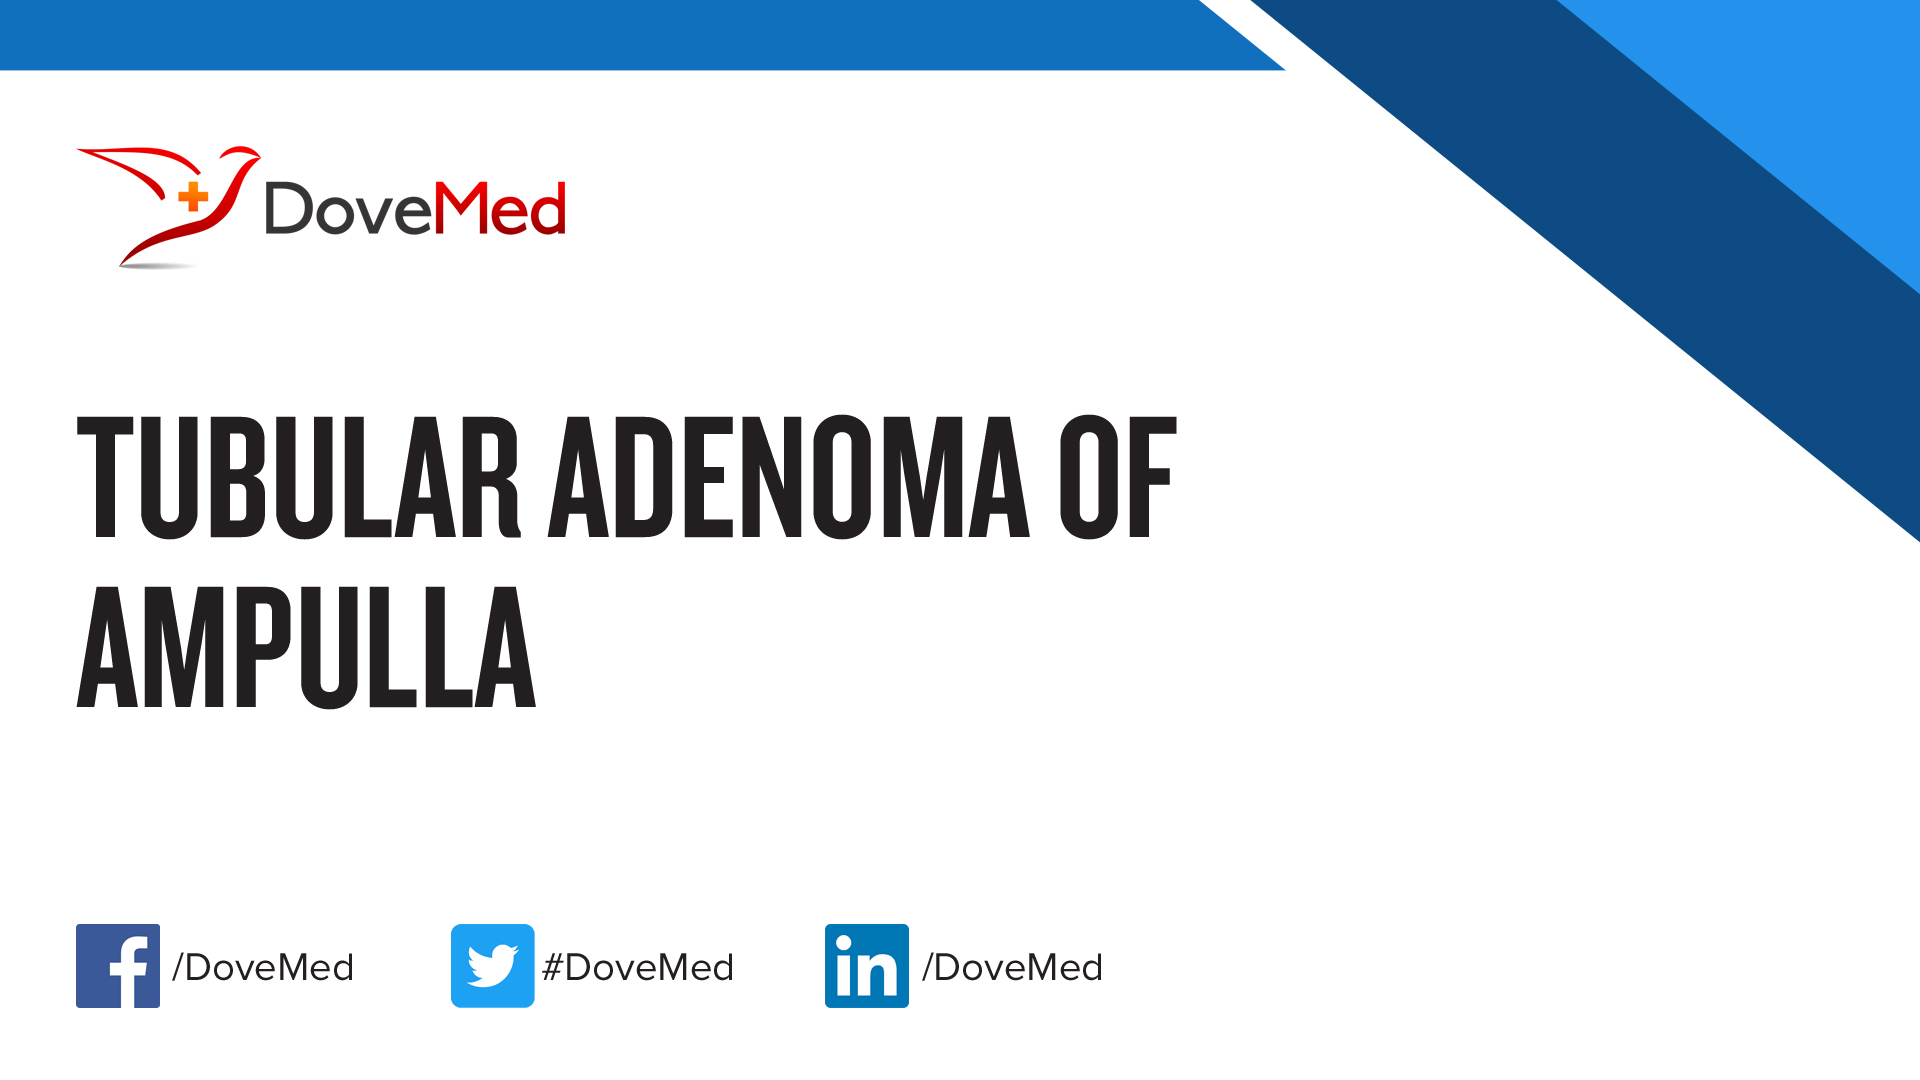 tubulovillous adenoma with dysplasia